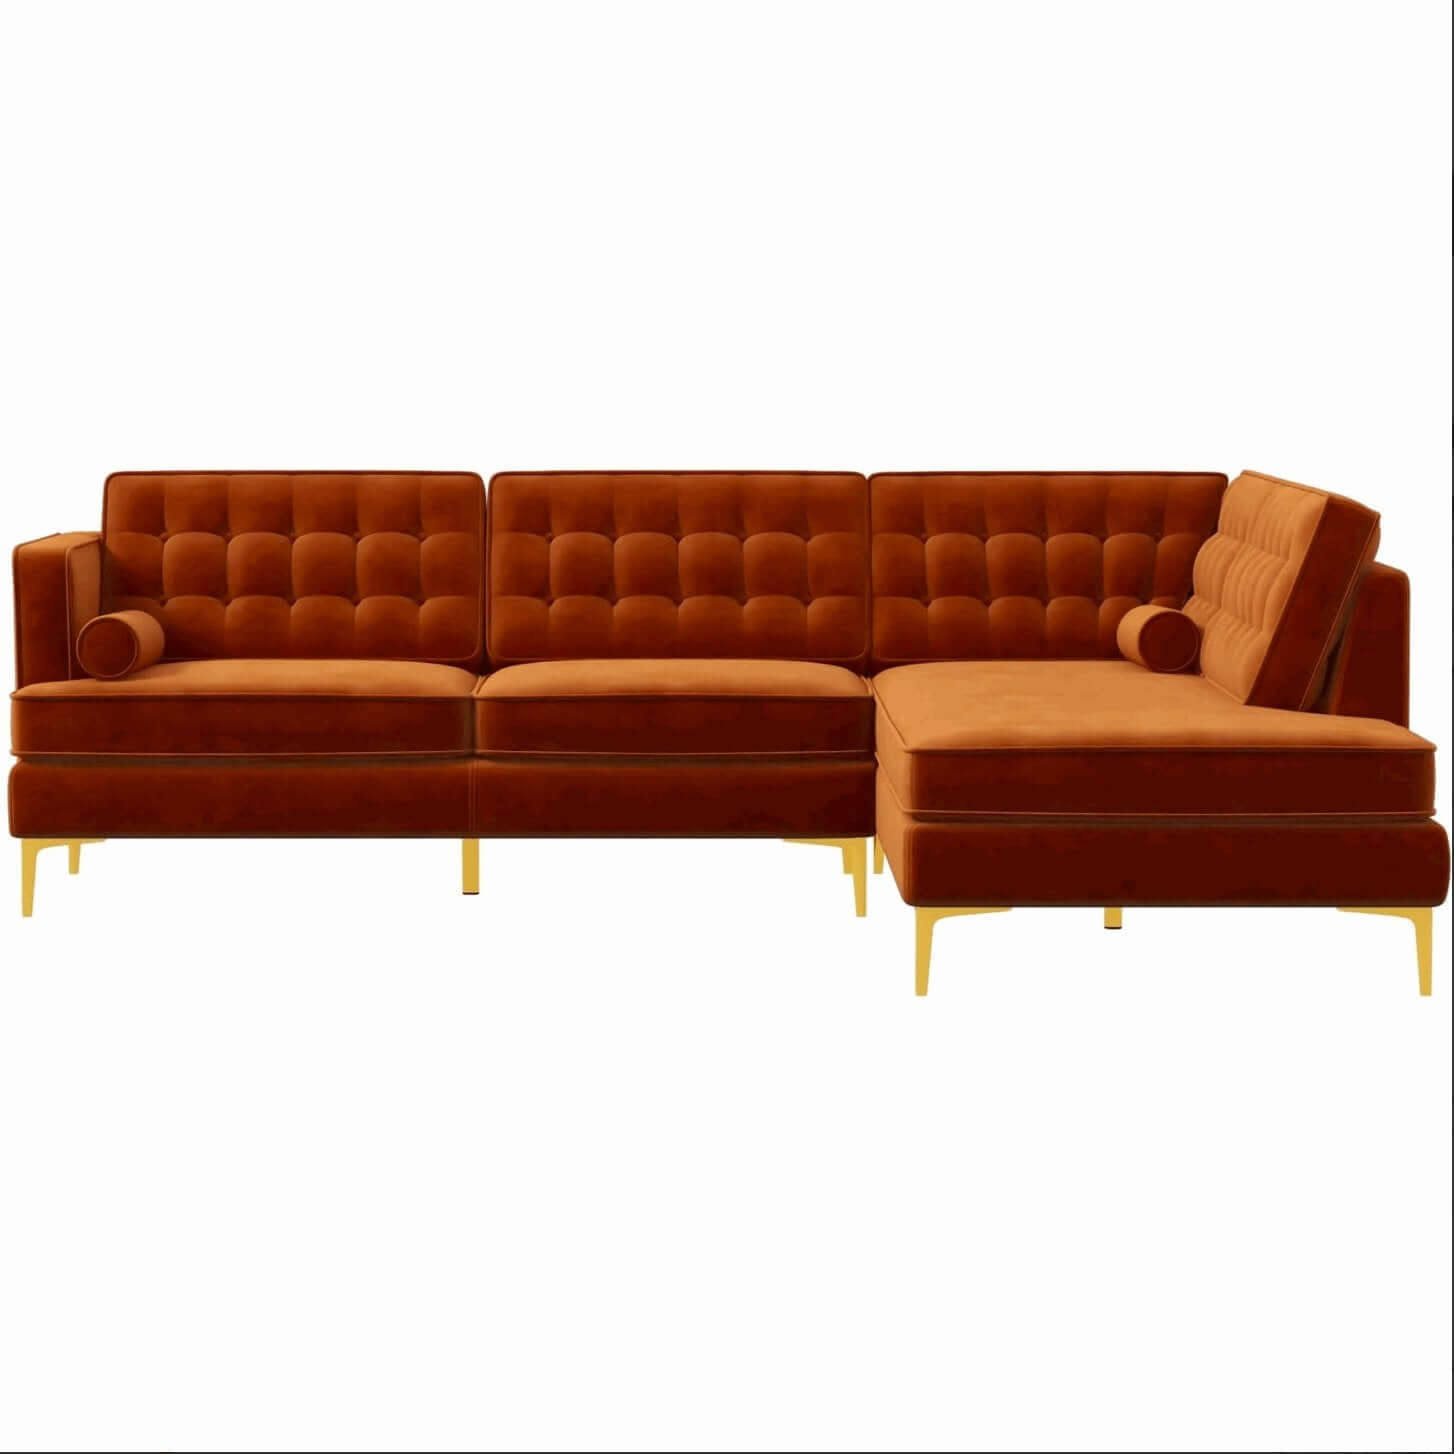 Brooke MCM Tufted Chaise Sectional Sofa 101" - Revel Sofa 